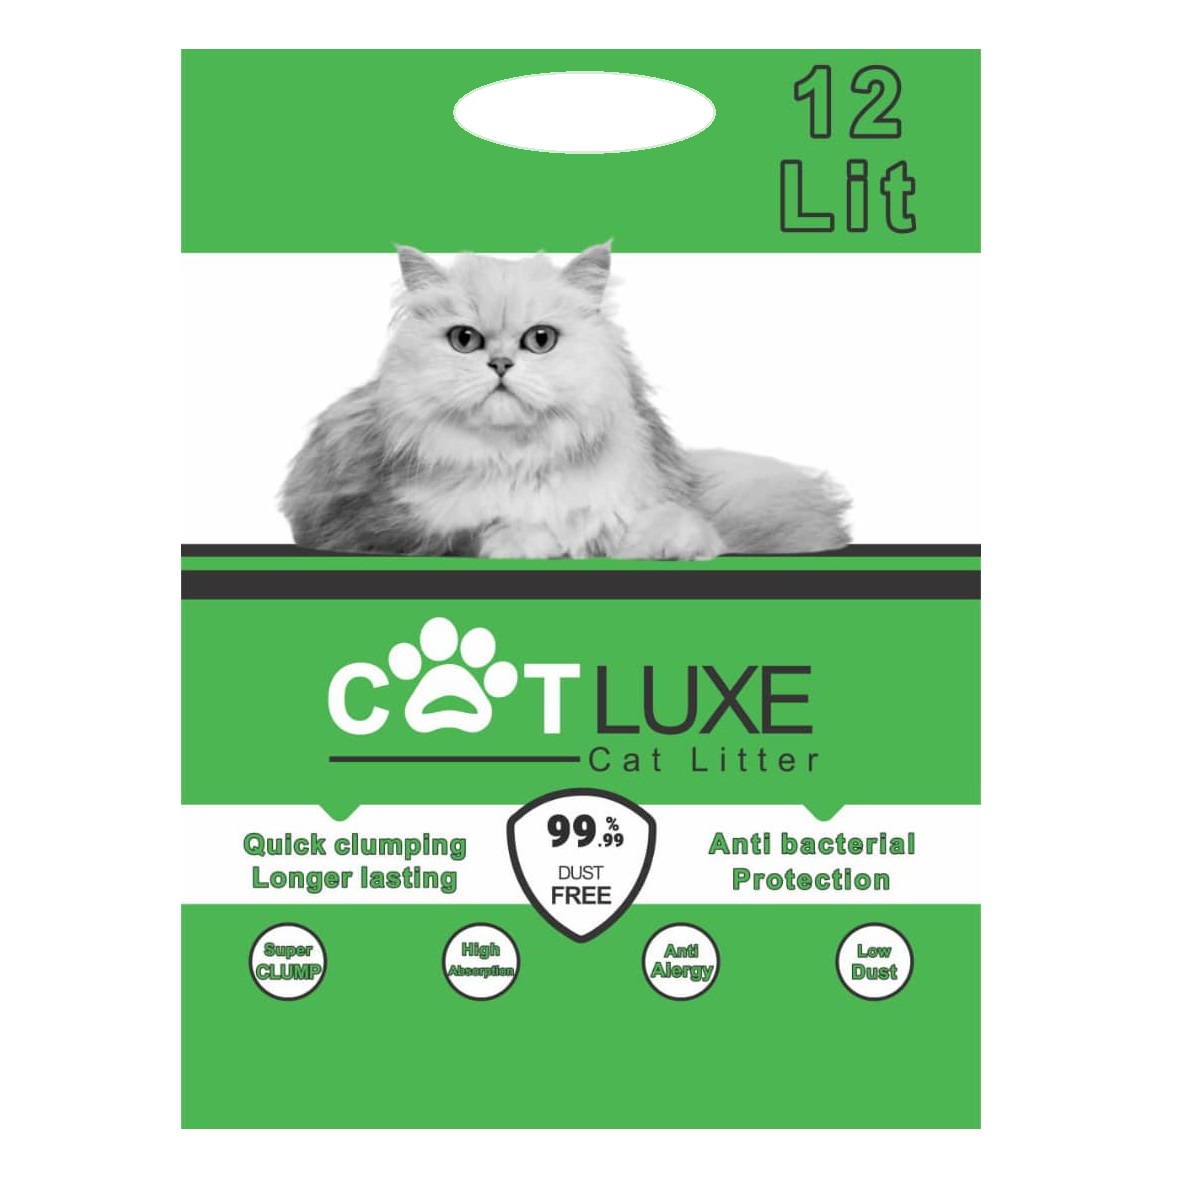 نگهداری سگ در خانه - خاک گربه کت لوکس گرانول وزن 10 کیلوگرم